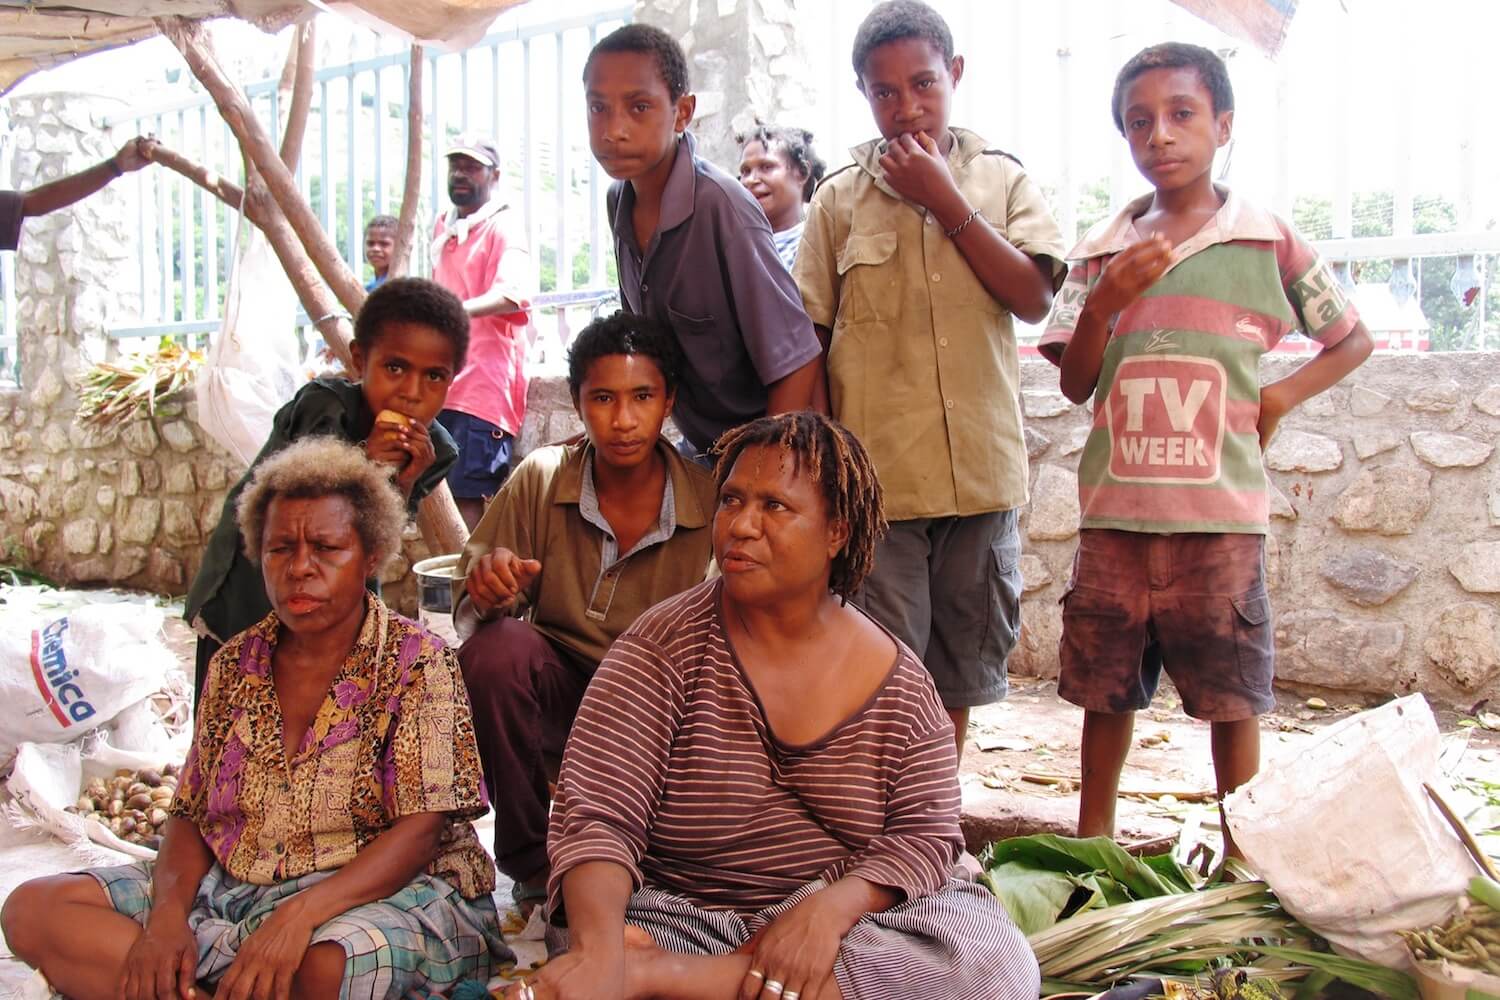 Papua New Guinea: Ingkintja